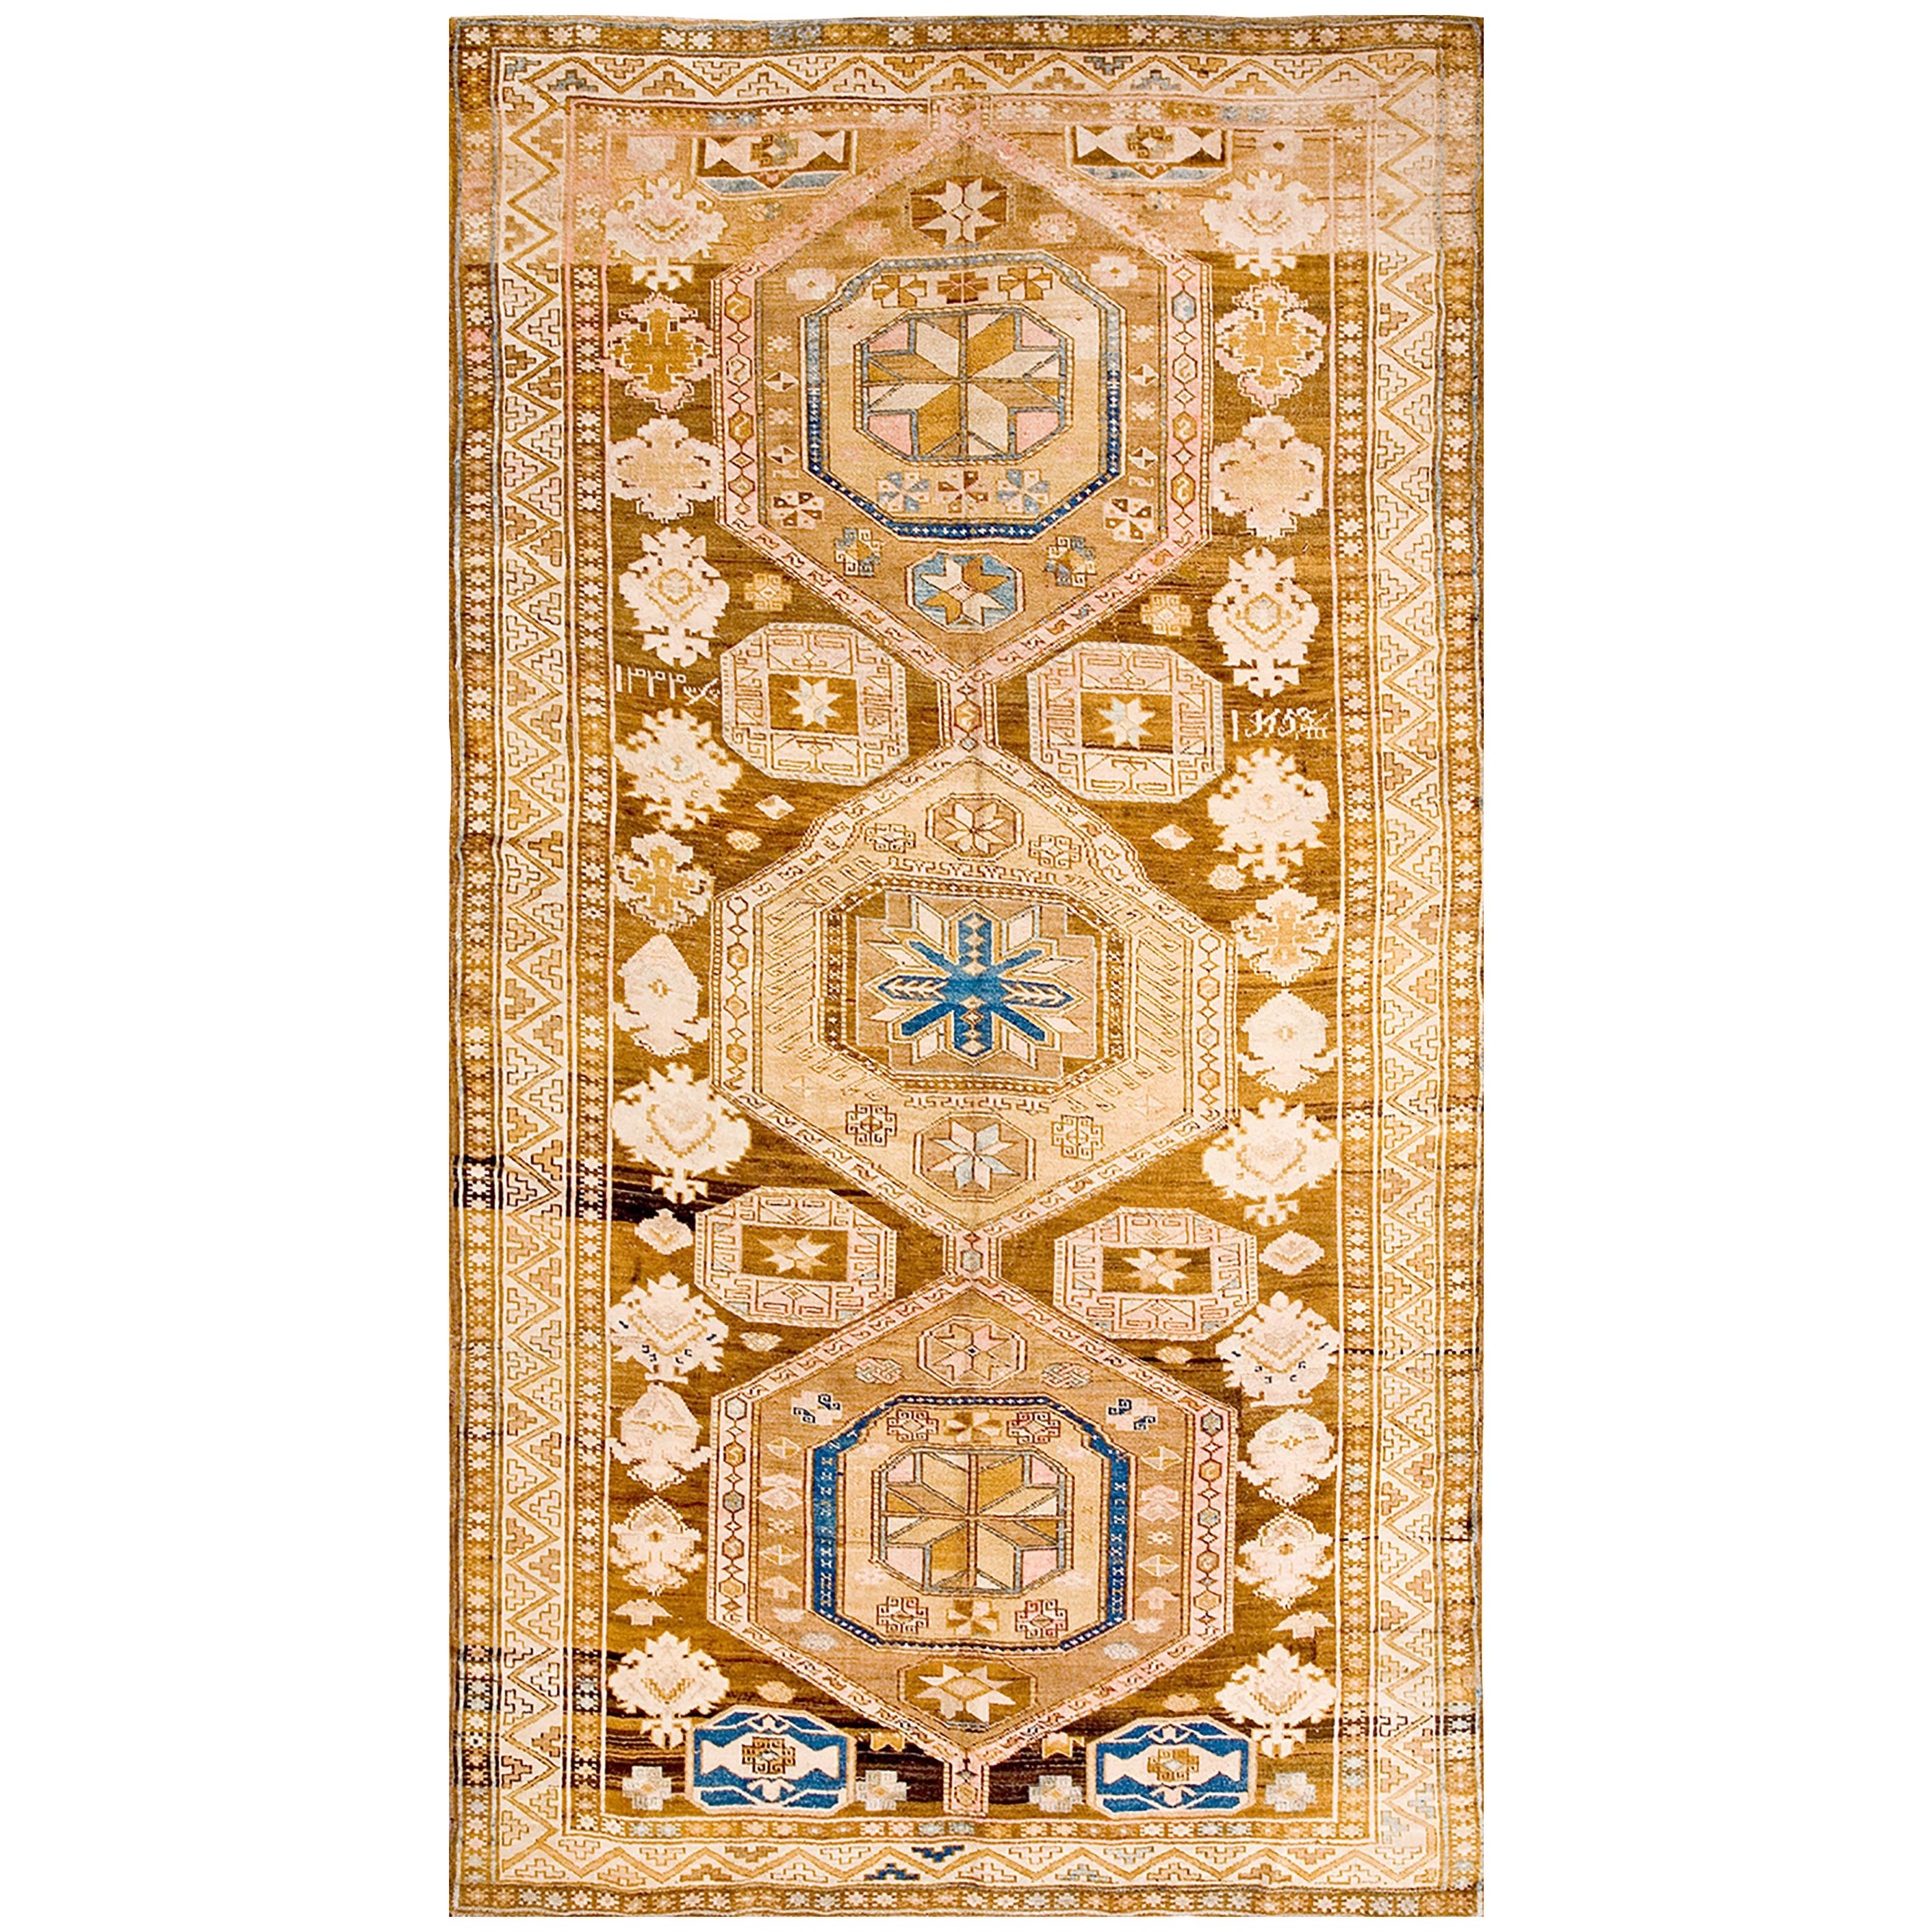 Late 19th Century Caucasian Karabagh Carpet ( 6 6" x 12'2" - 198 x 371 )